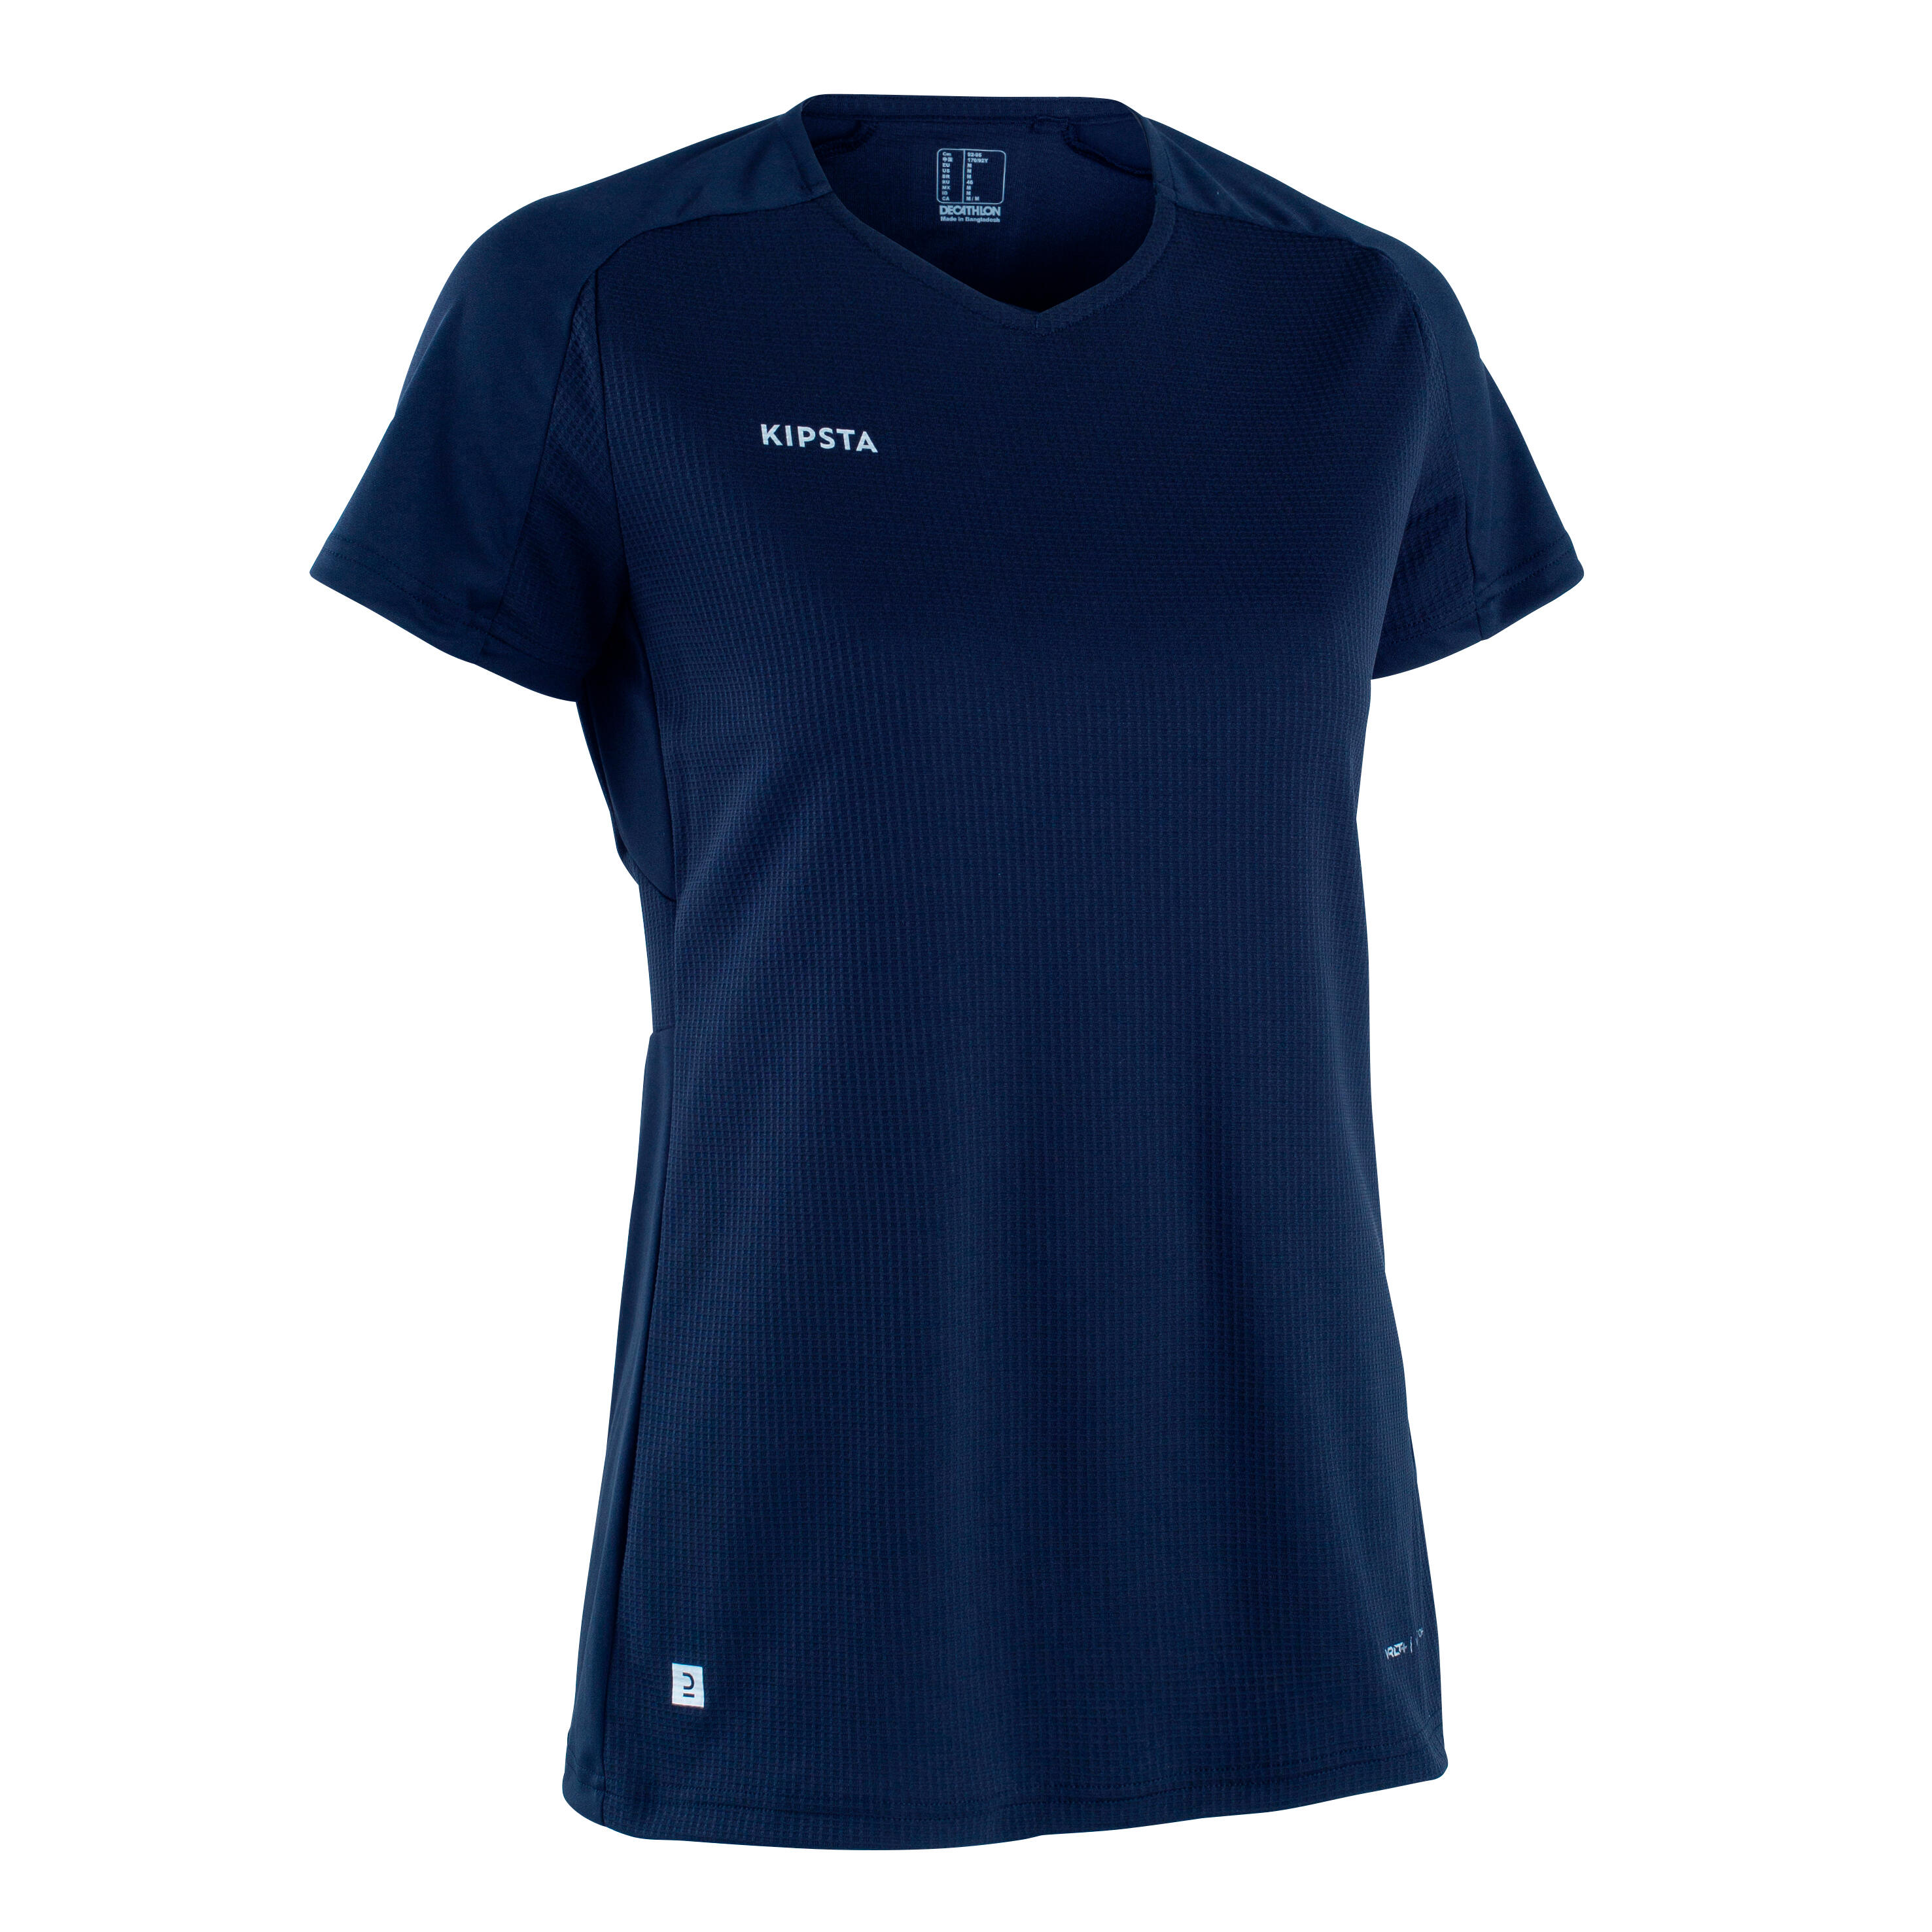 KIPSTA Women's Football Shirt Viralto - Plain Navy